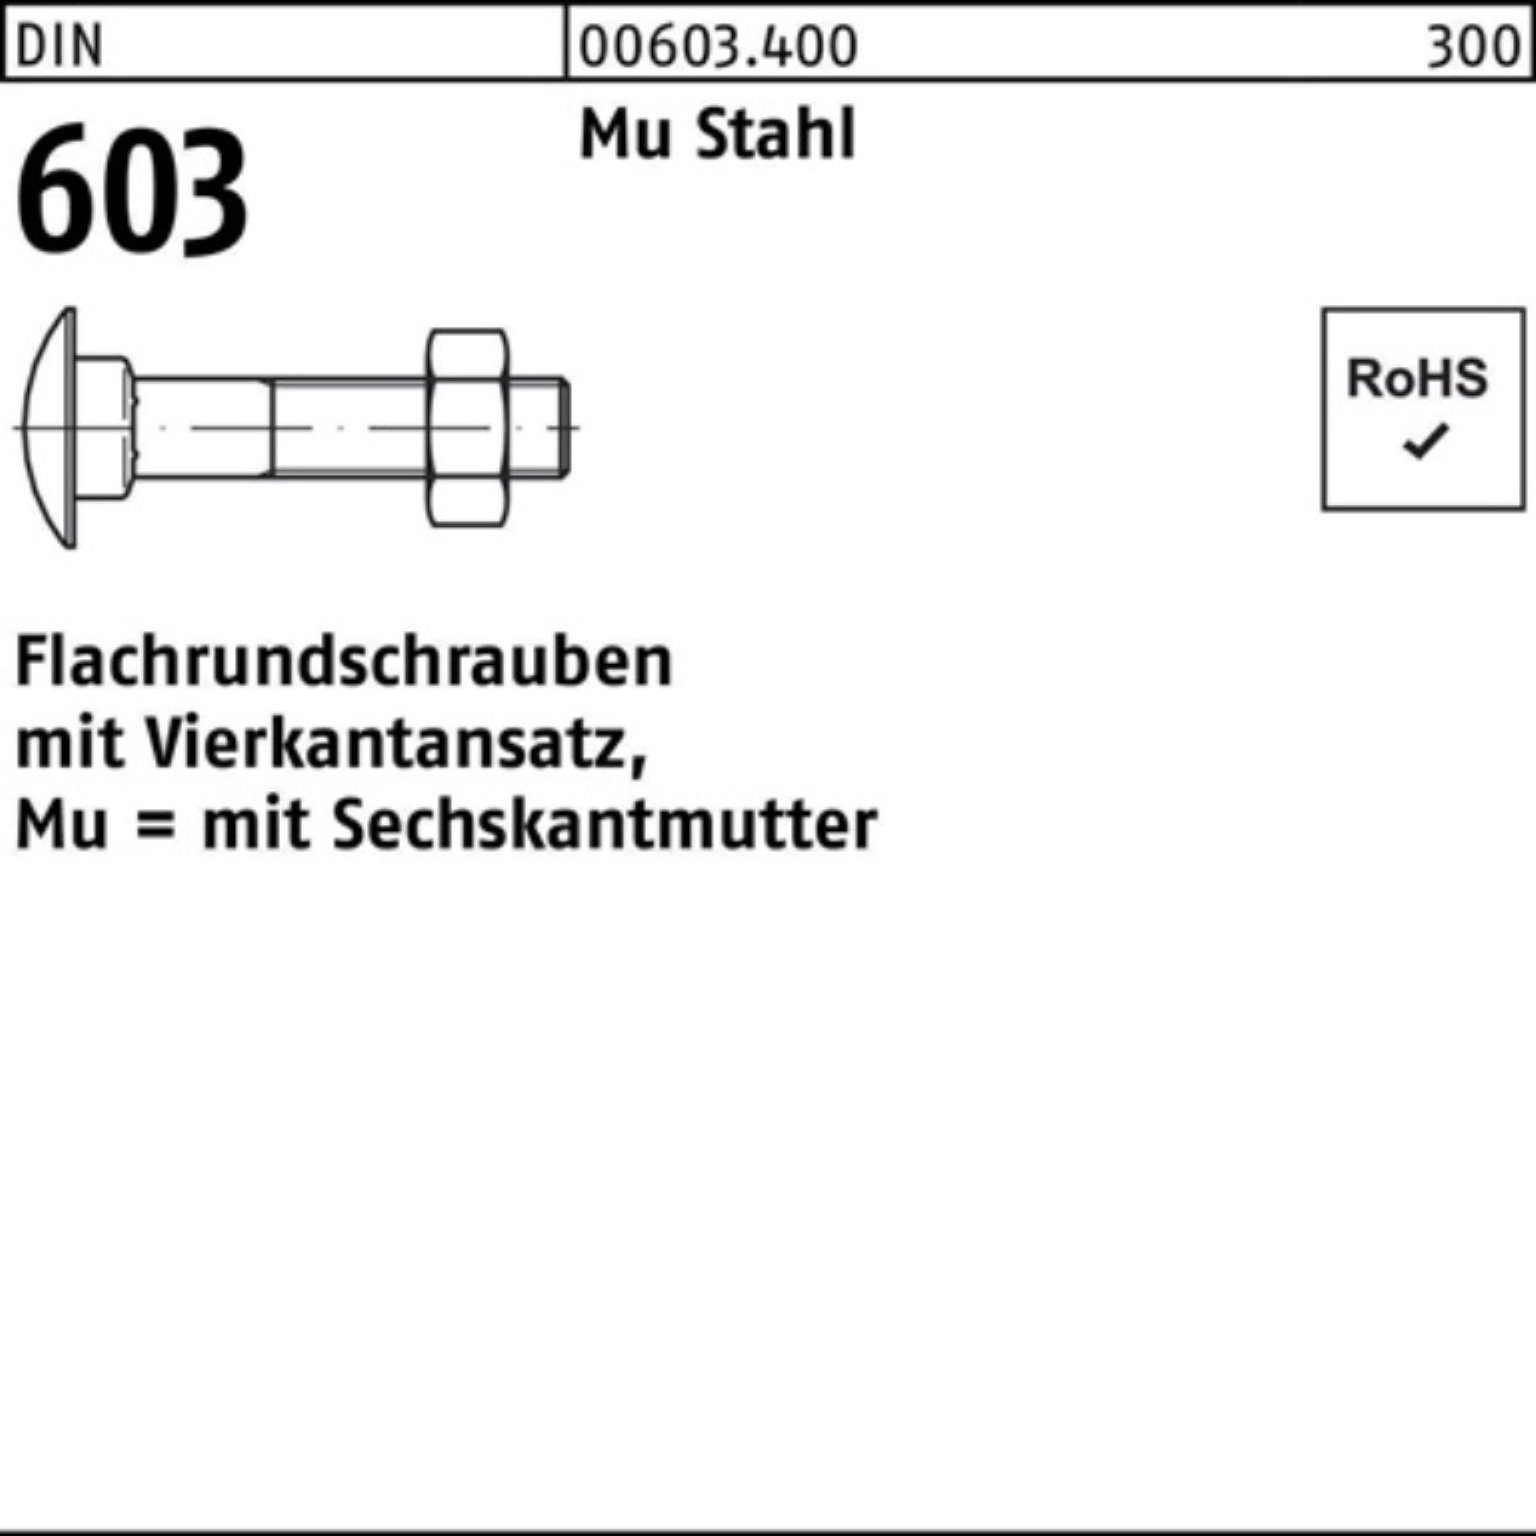 Flachrundschraube Vierkantansatz/6-ktmutter Reyher DIN M12x45 Schraube 603 100er Pack